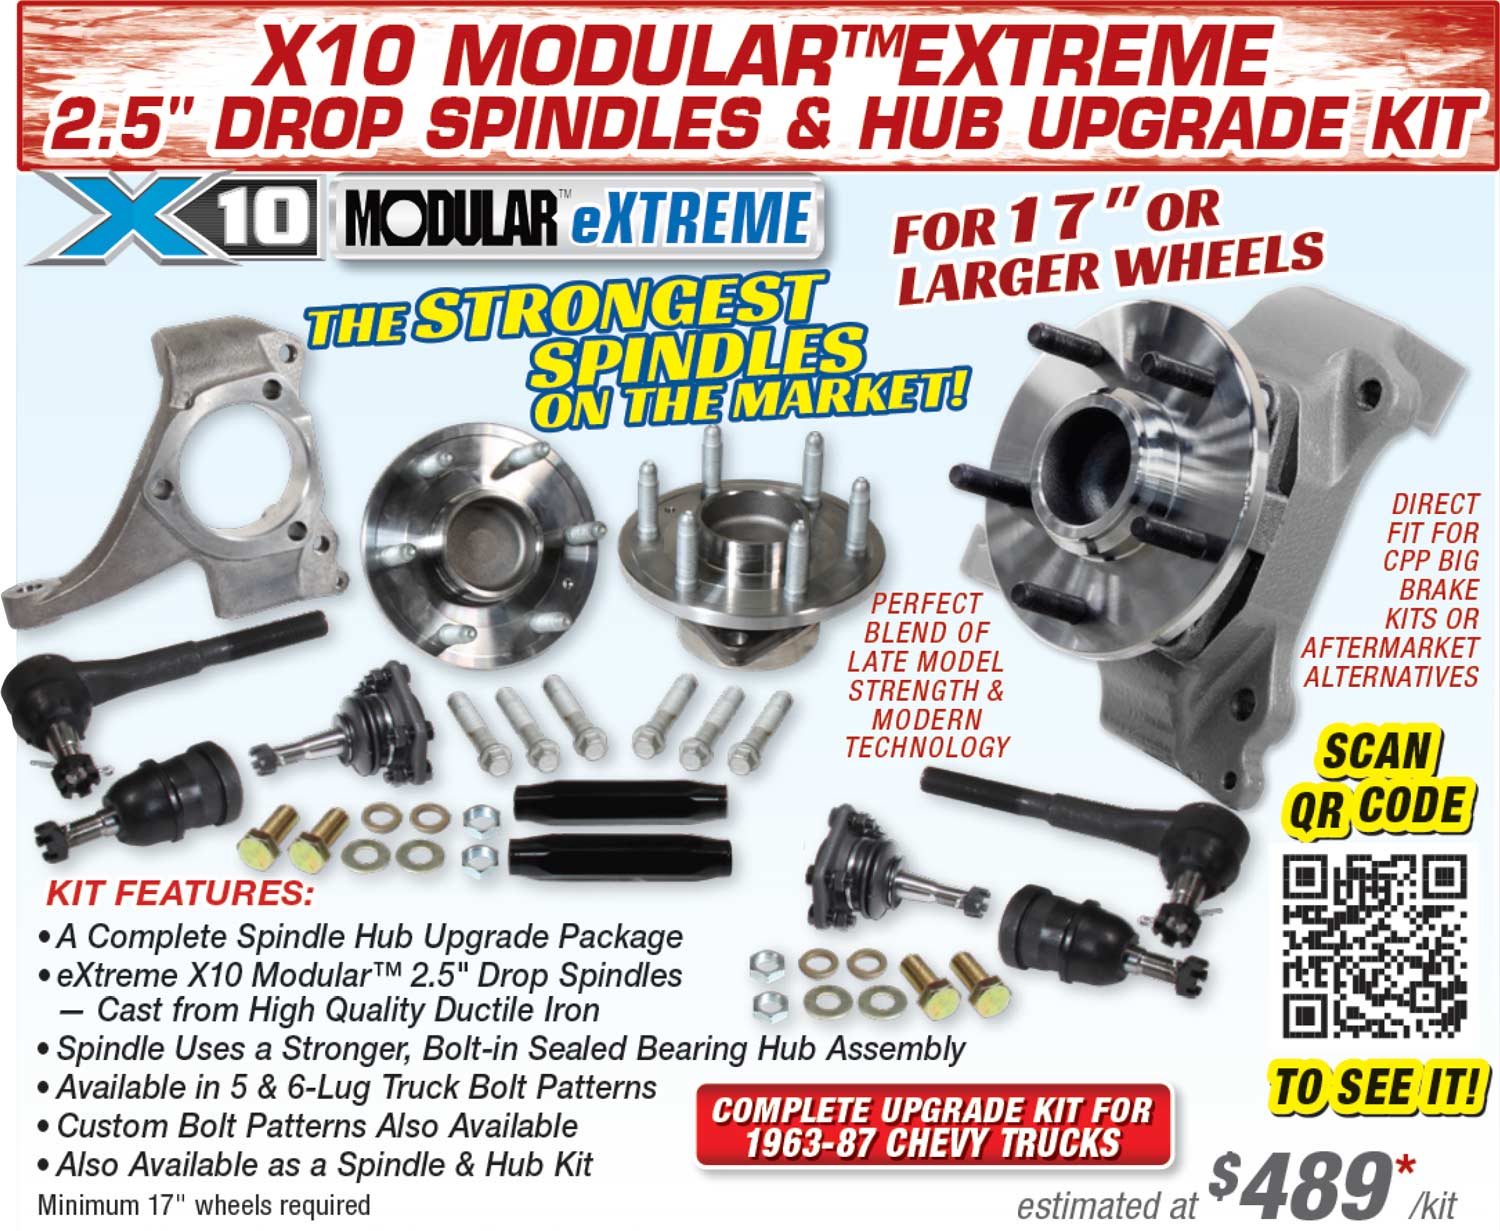 X10 Modular Extreme